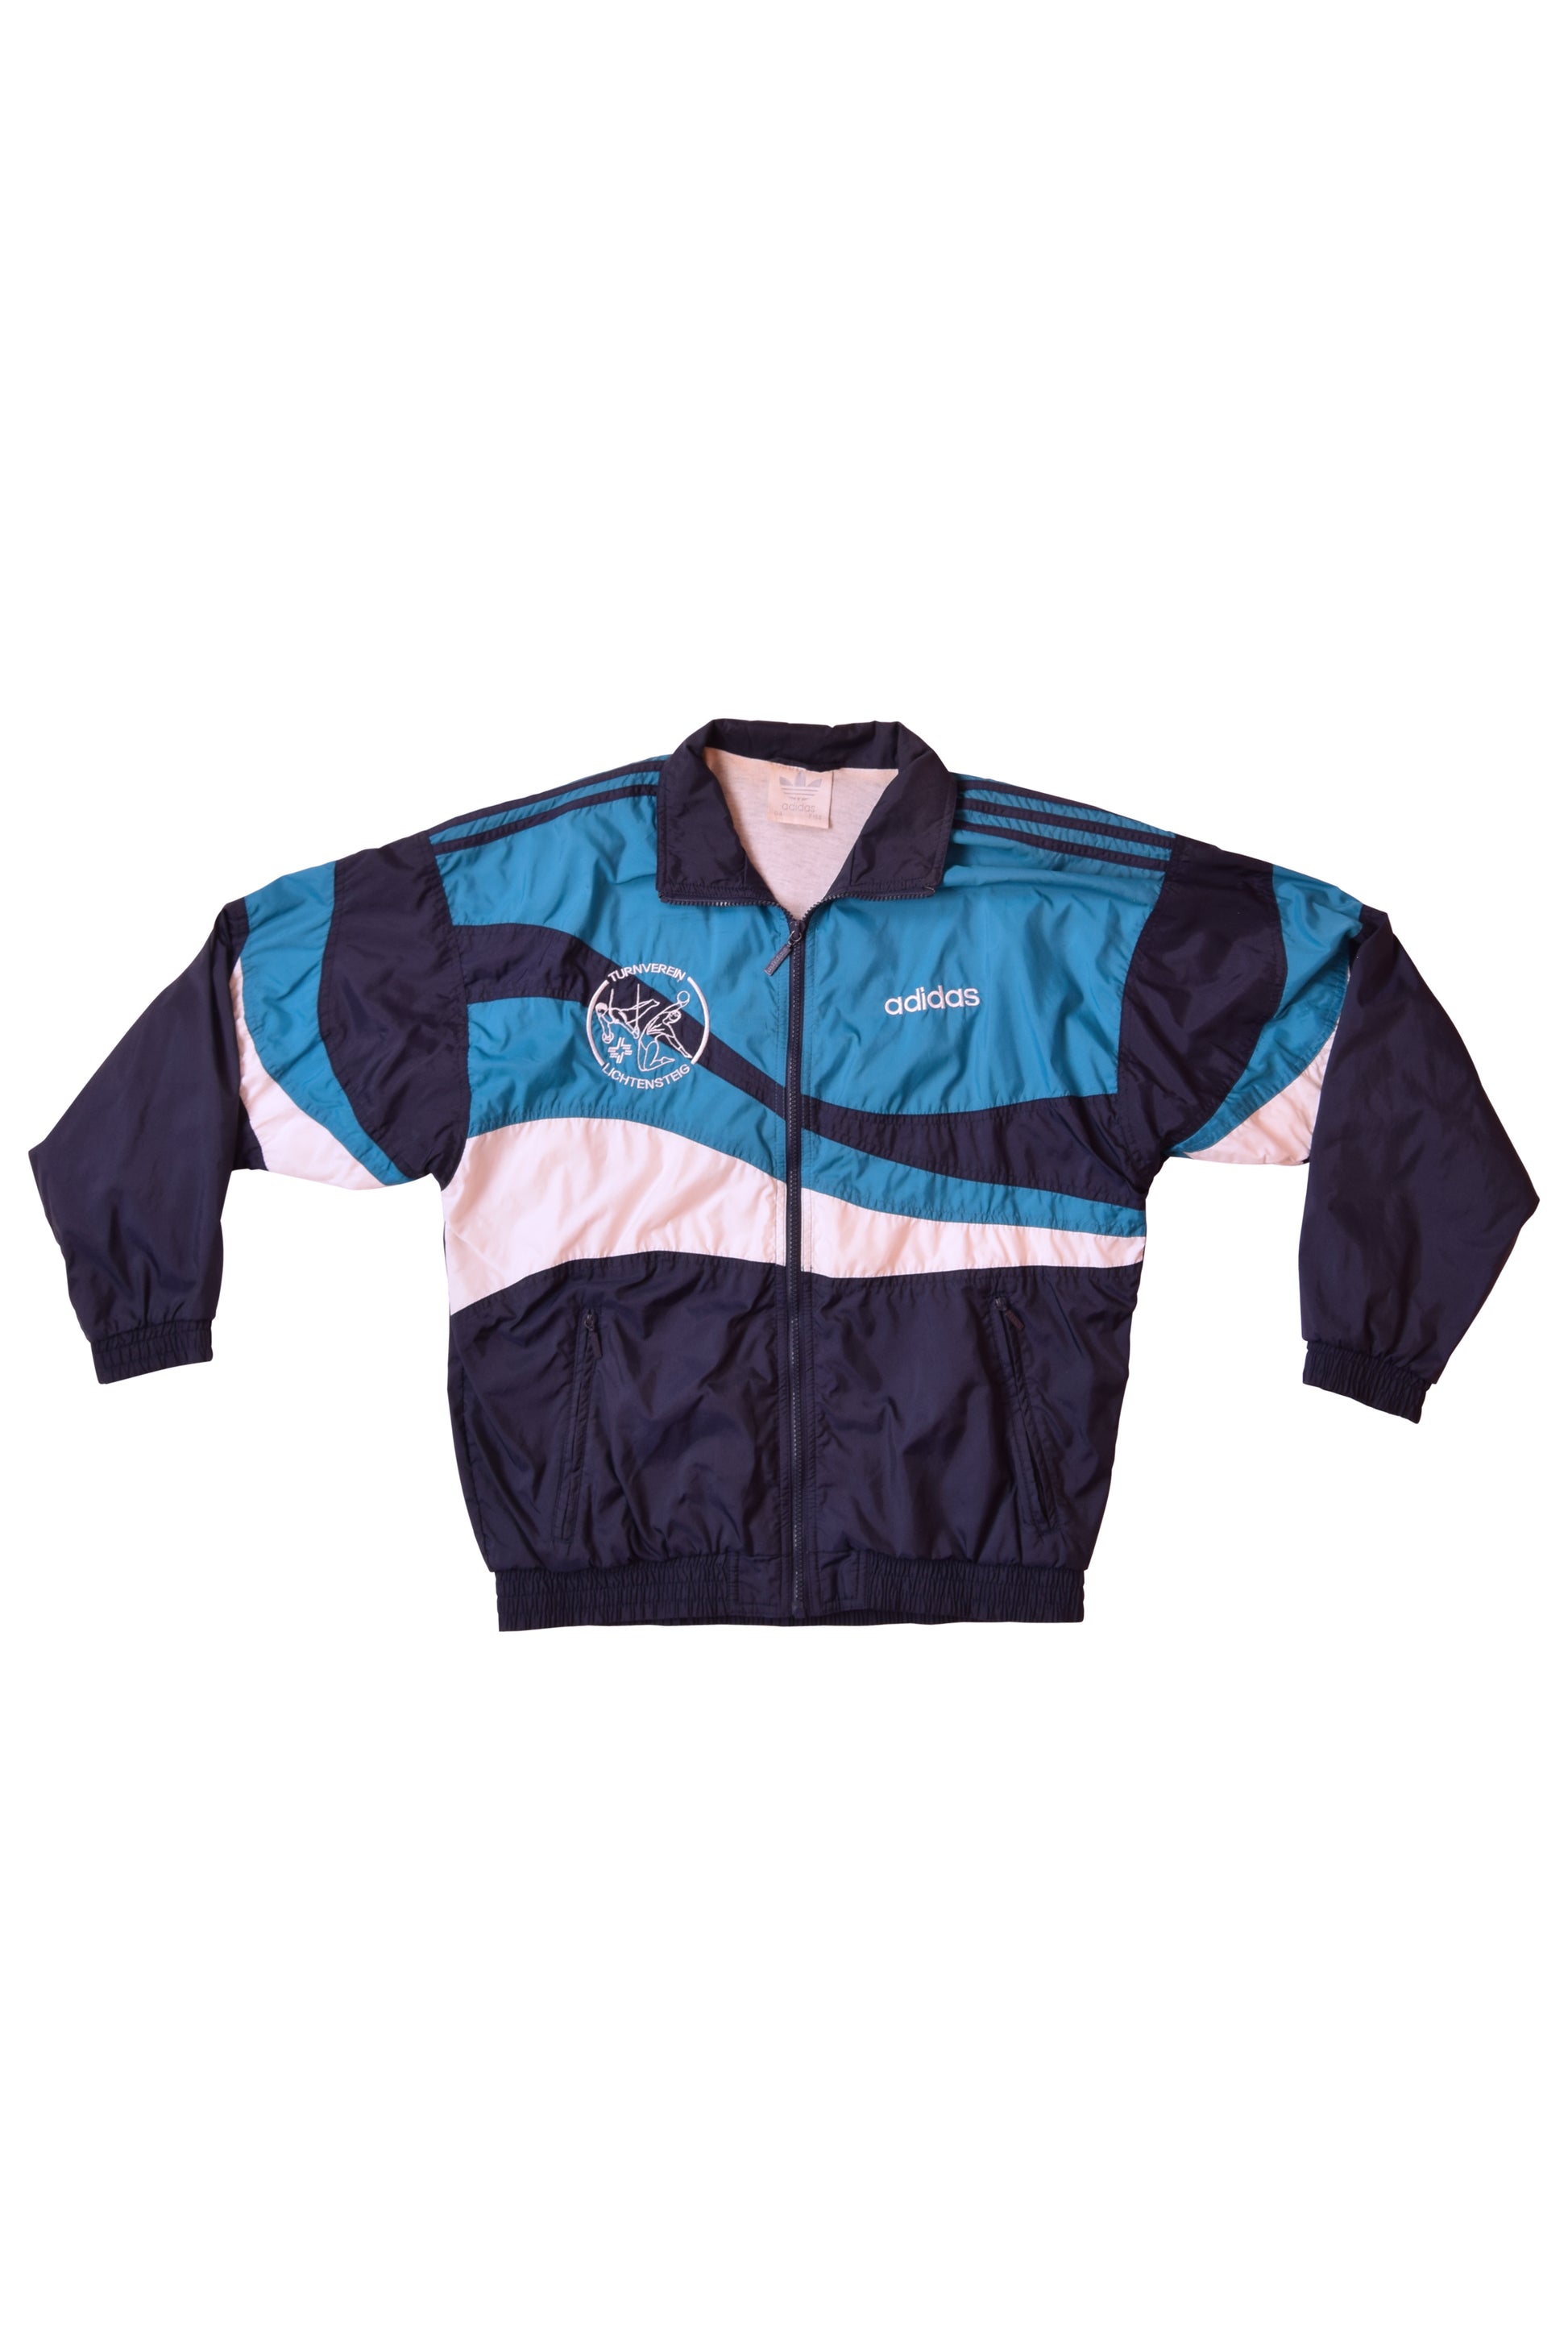 Vintage Adidas Jacket / Shell 90's  